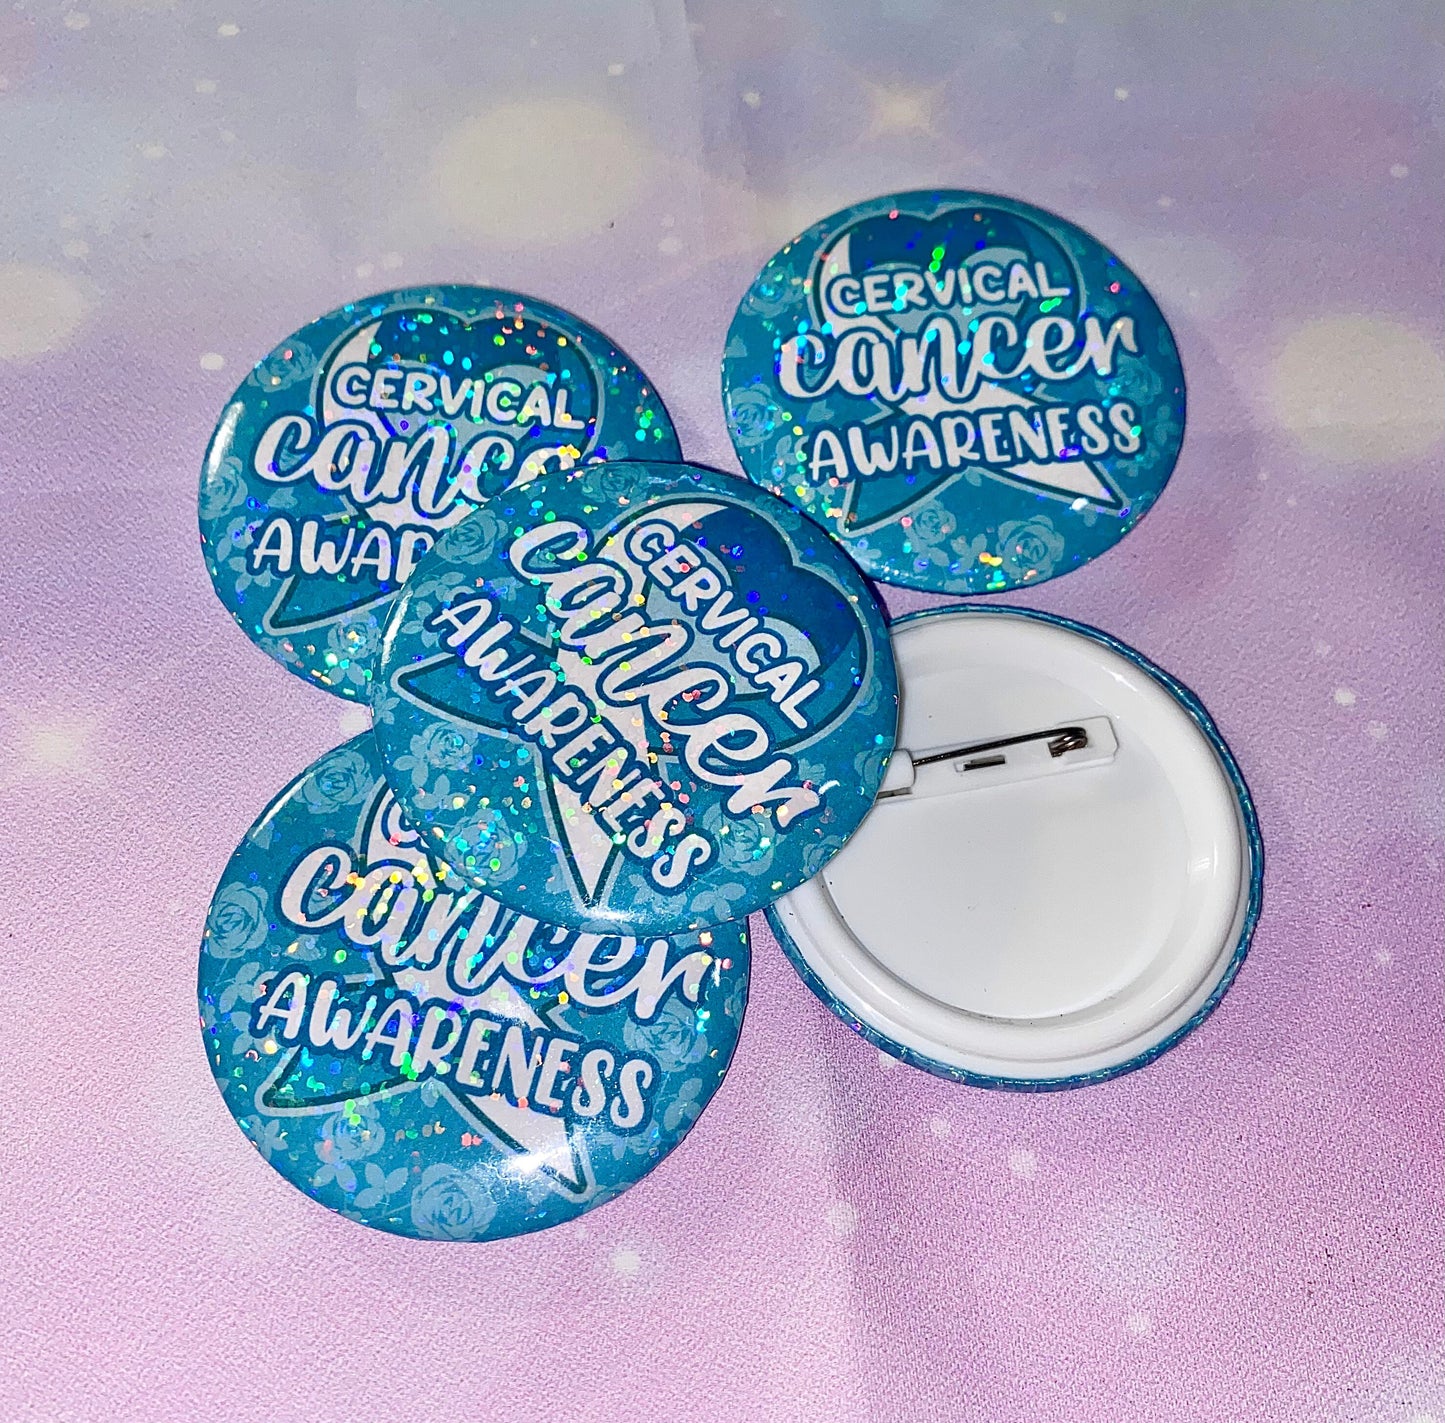 Cervical Cancer Awareness Button Pin | cute button pins, cute pins, Kawaii pins, Kawaii, cervical cancer awareness, cervical cancer